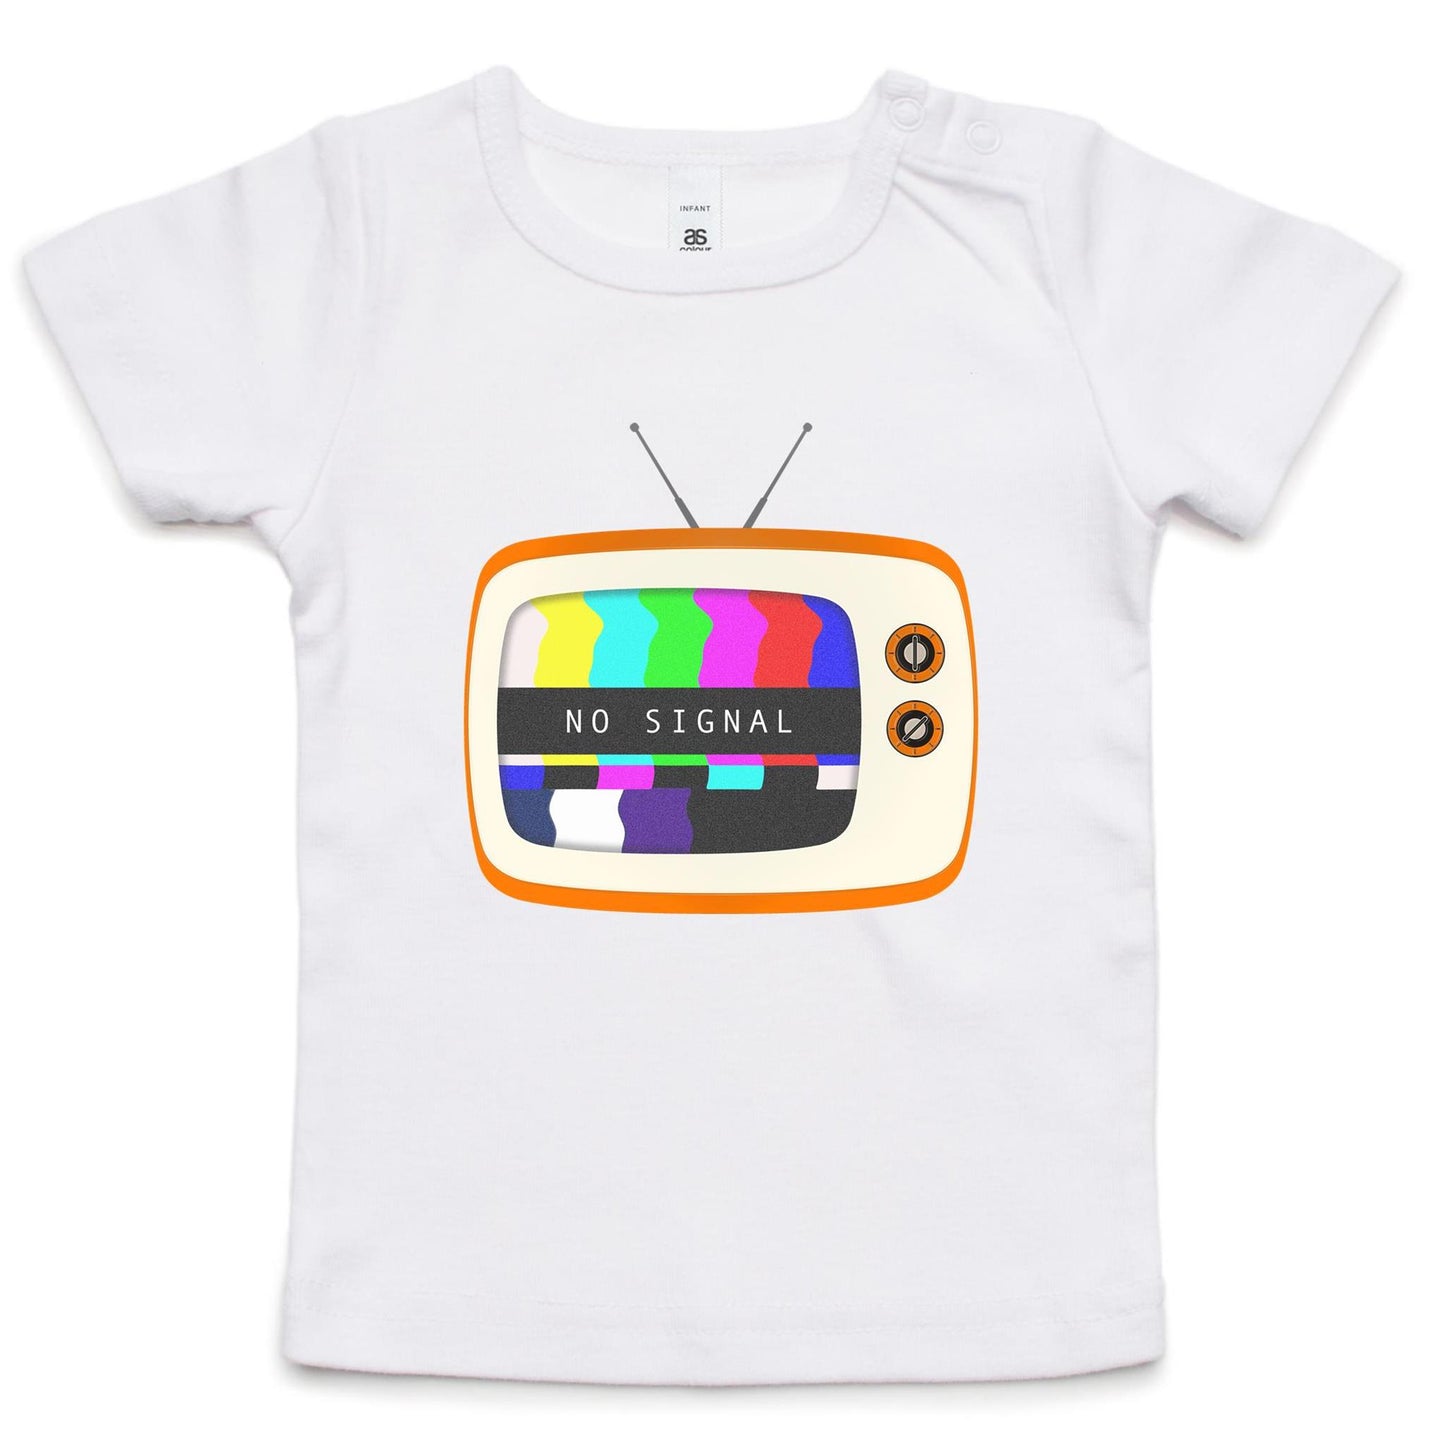 Retro Television, No Signal - Baby T-shirt White Baby T-shirt Retro